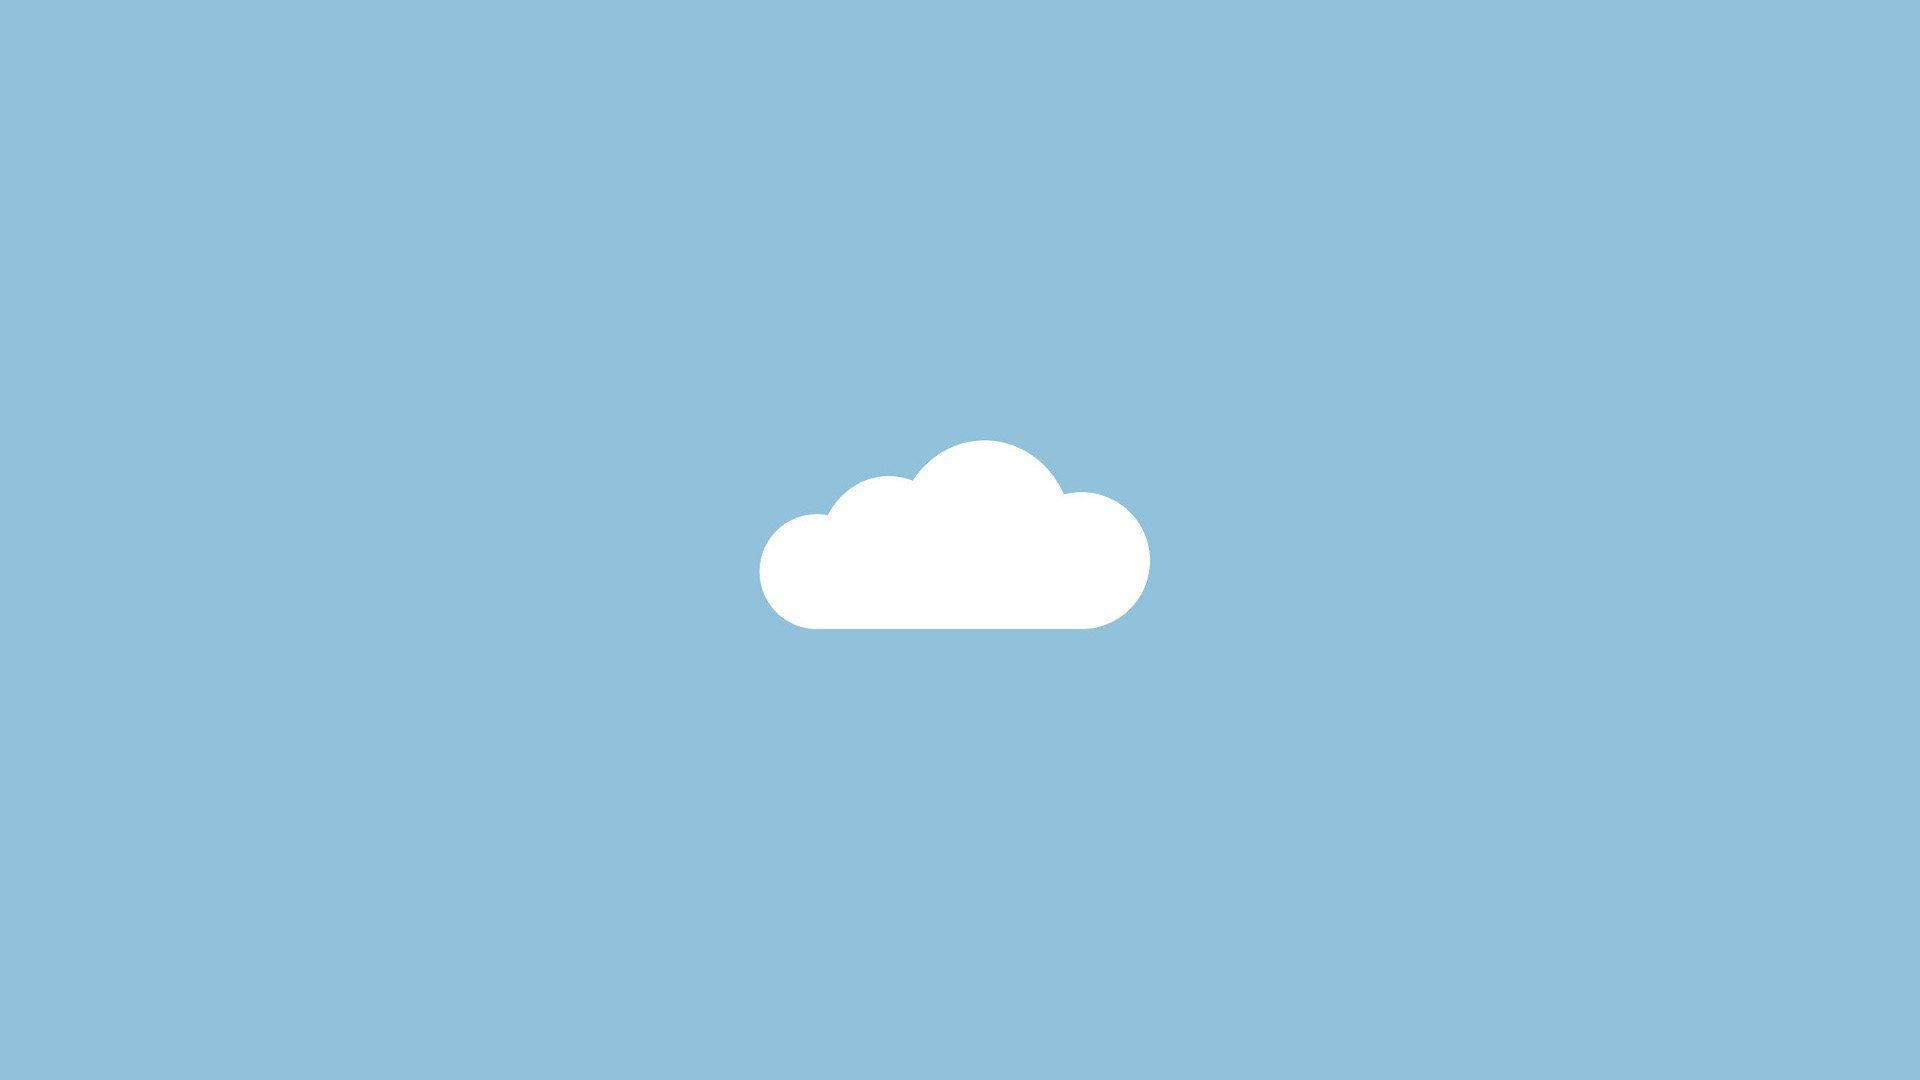 Simple Desktop Cloud